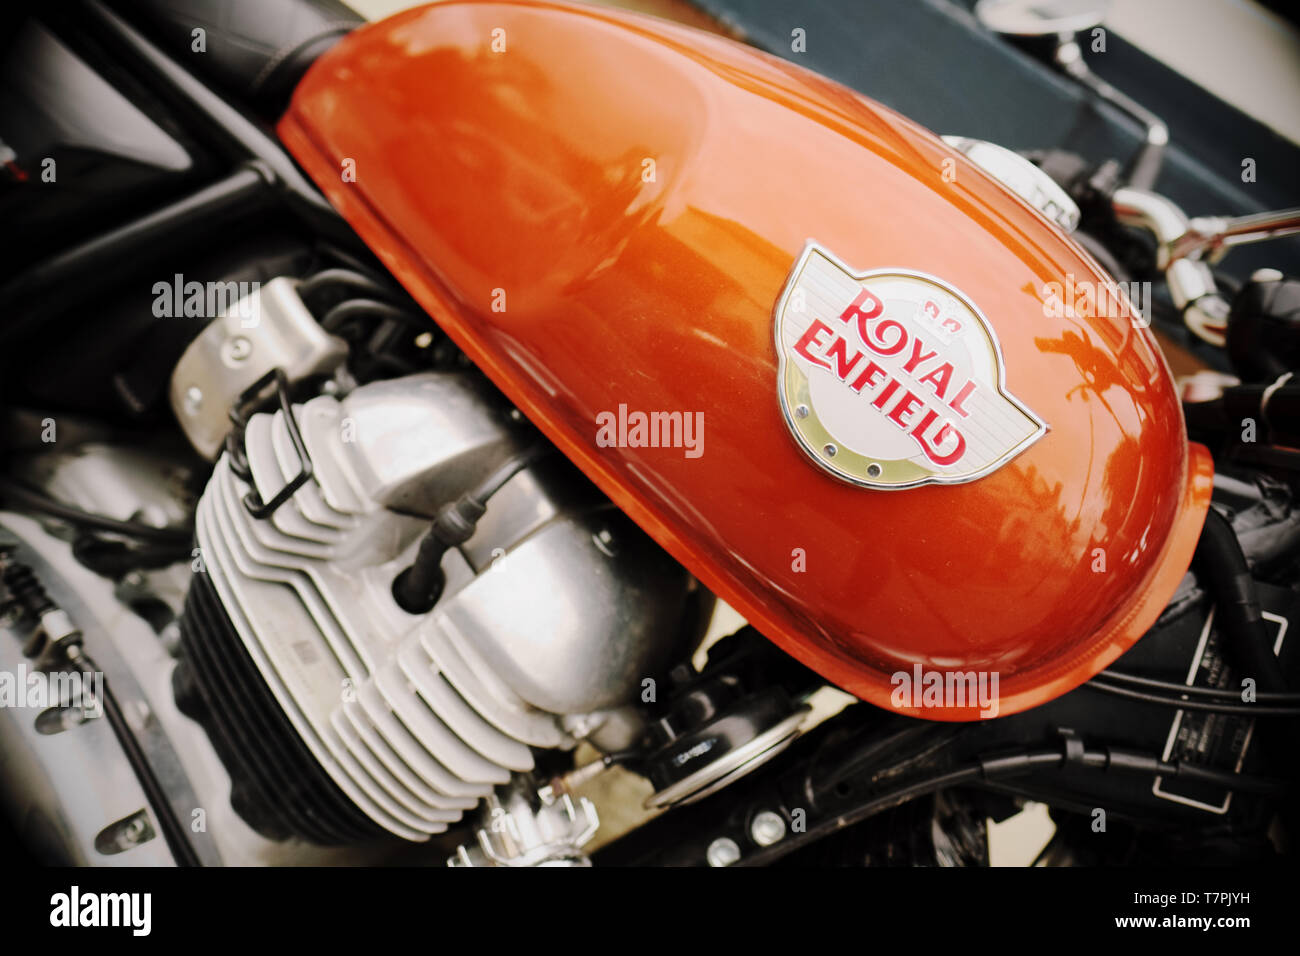 Royal Enfield Interceptor 650 cc motorcycle construit en Inde, vu dans UK 2019 Banque D'Images